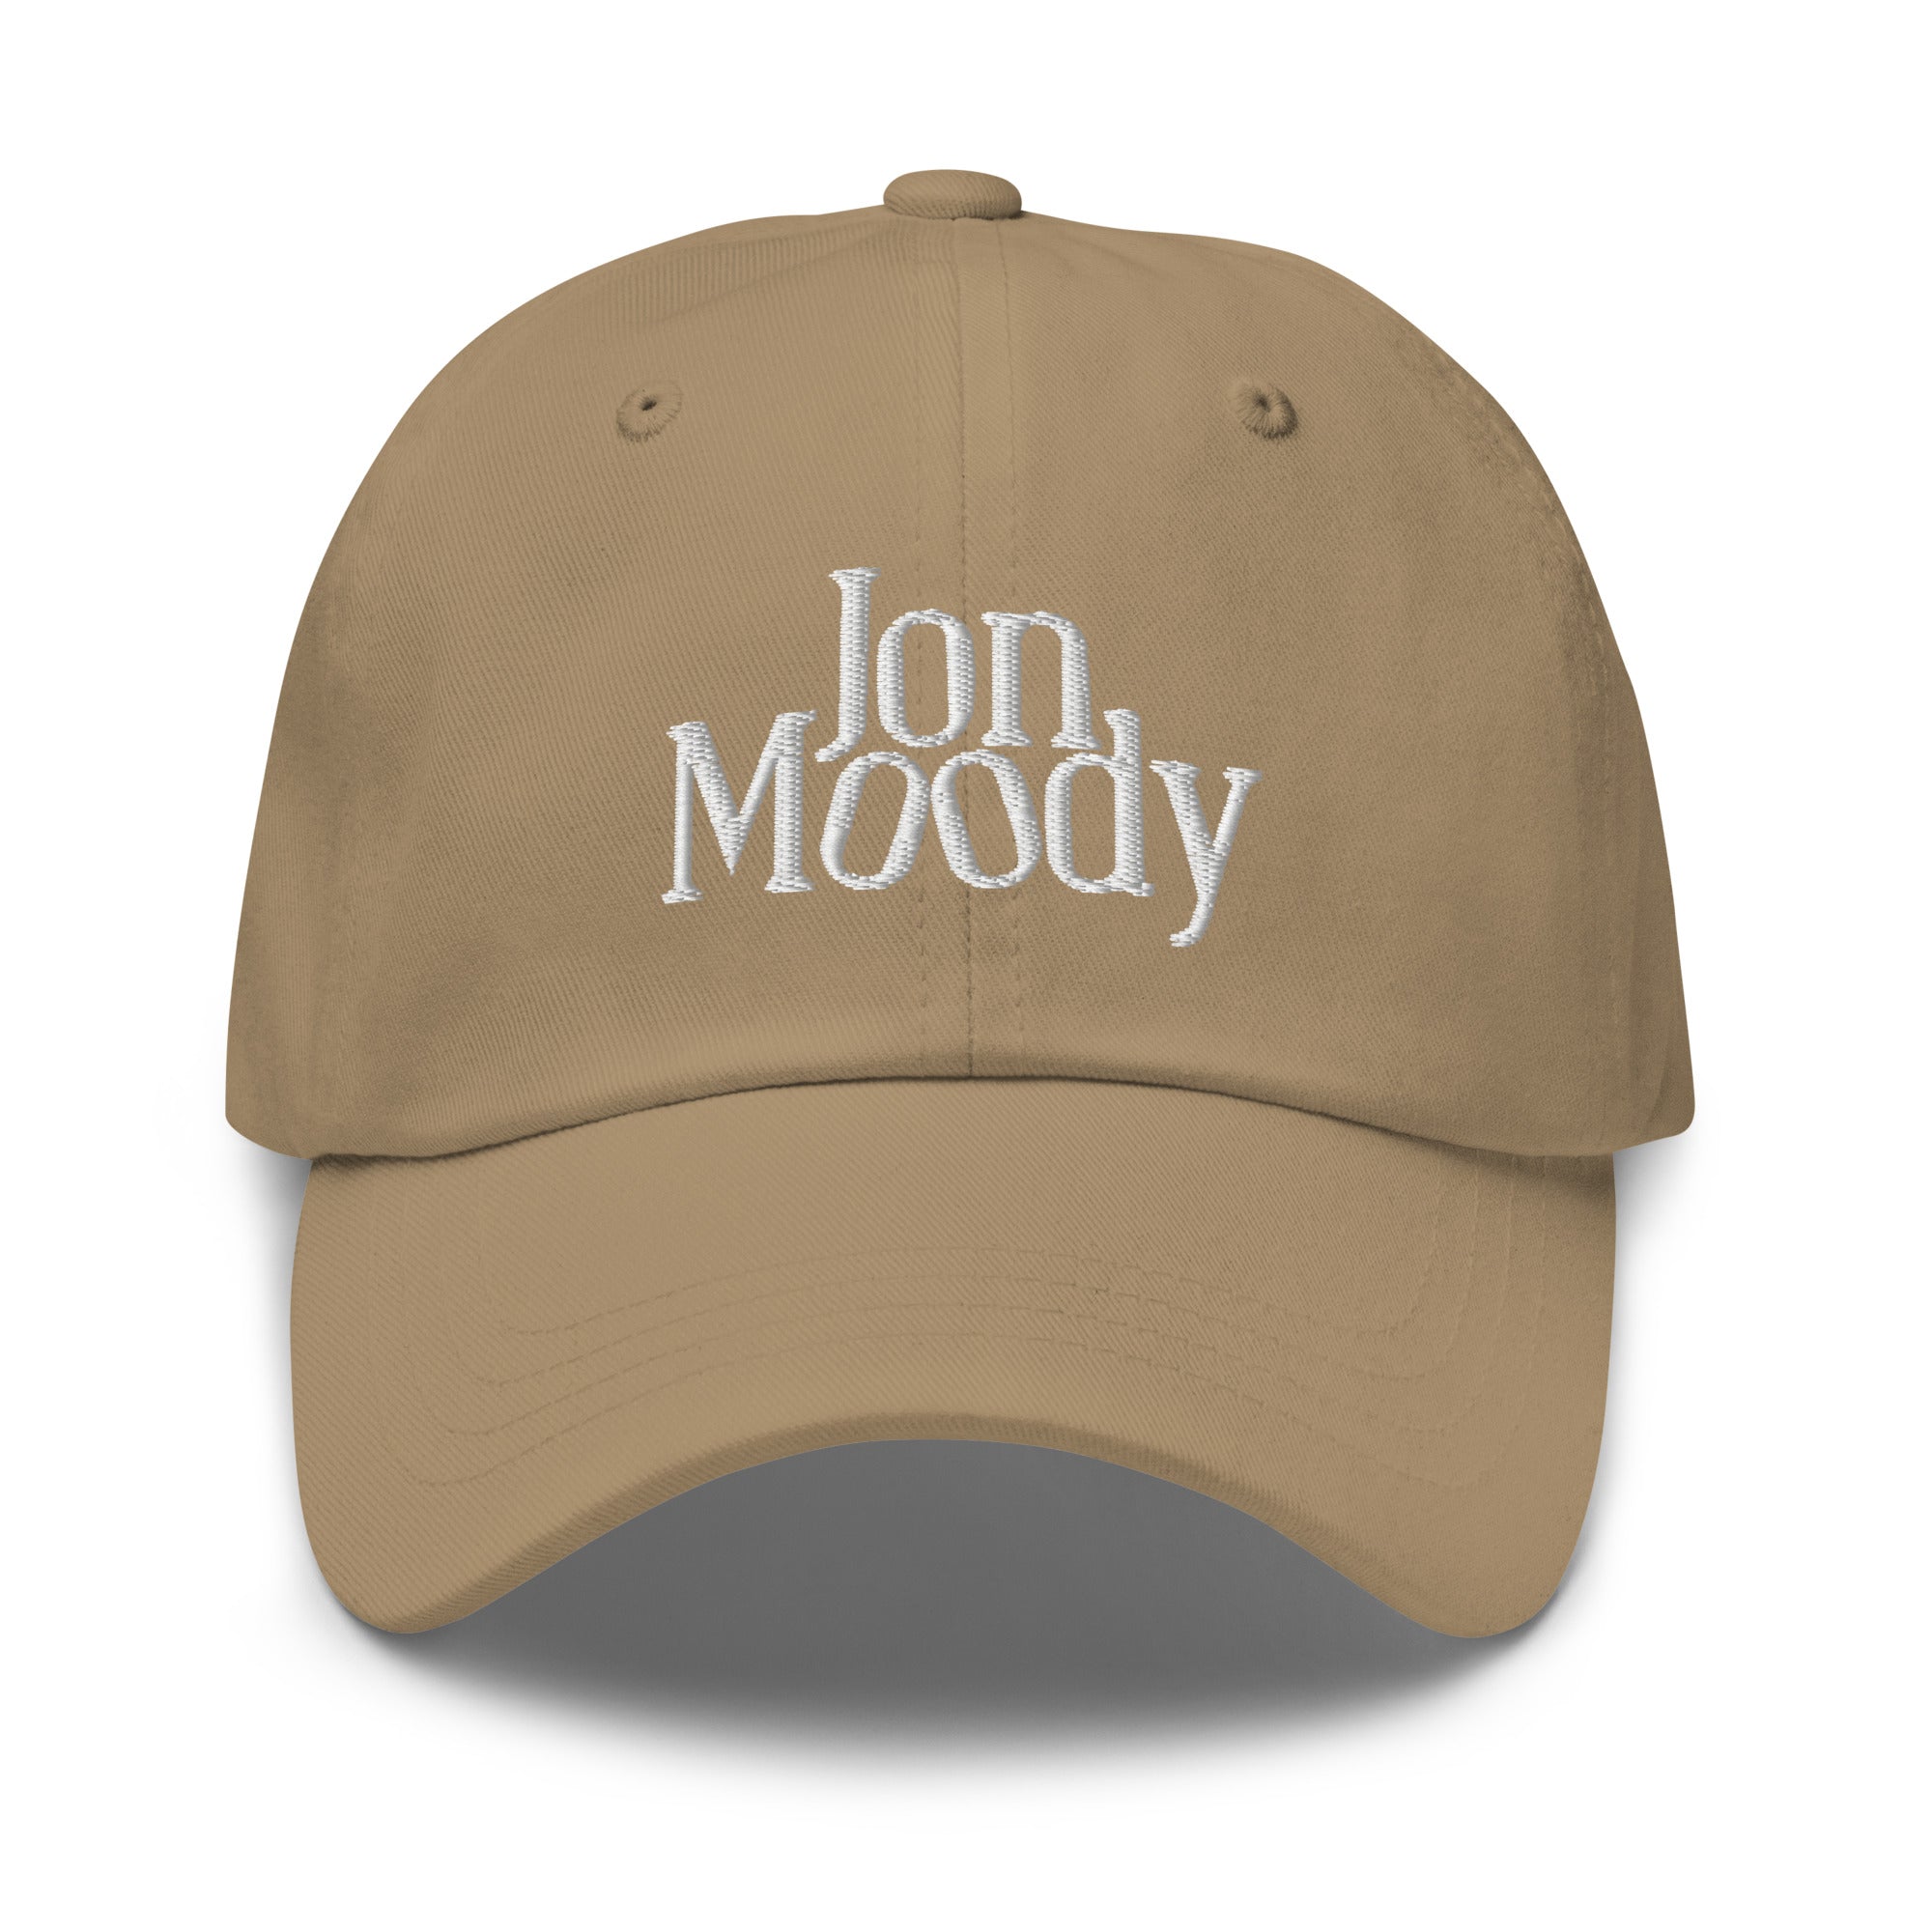 Jon Moody - Dad hat